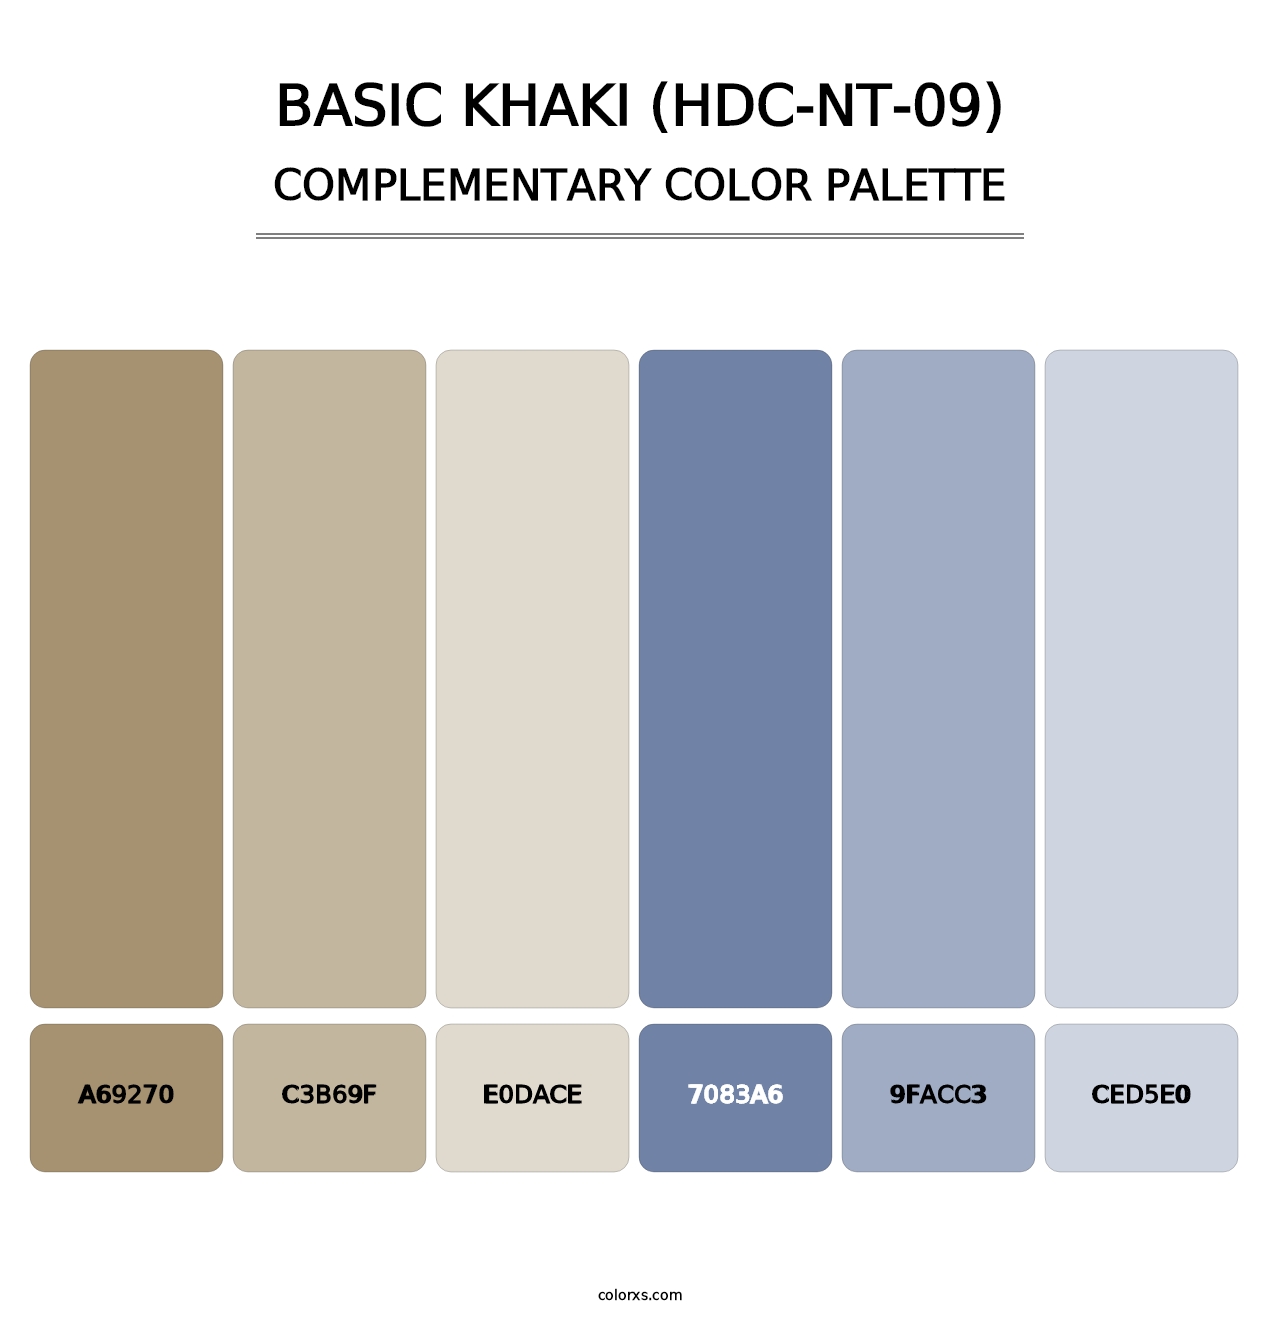 Basic Khaki (HDC-NT-09) - Complementary Color Palette